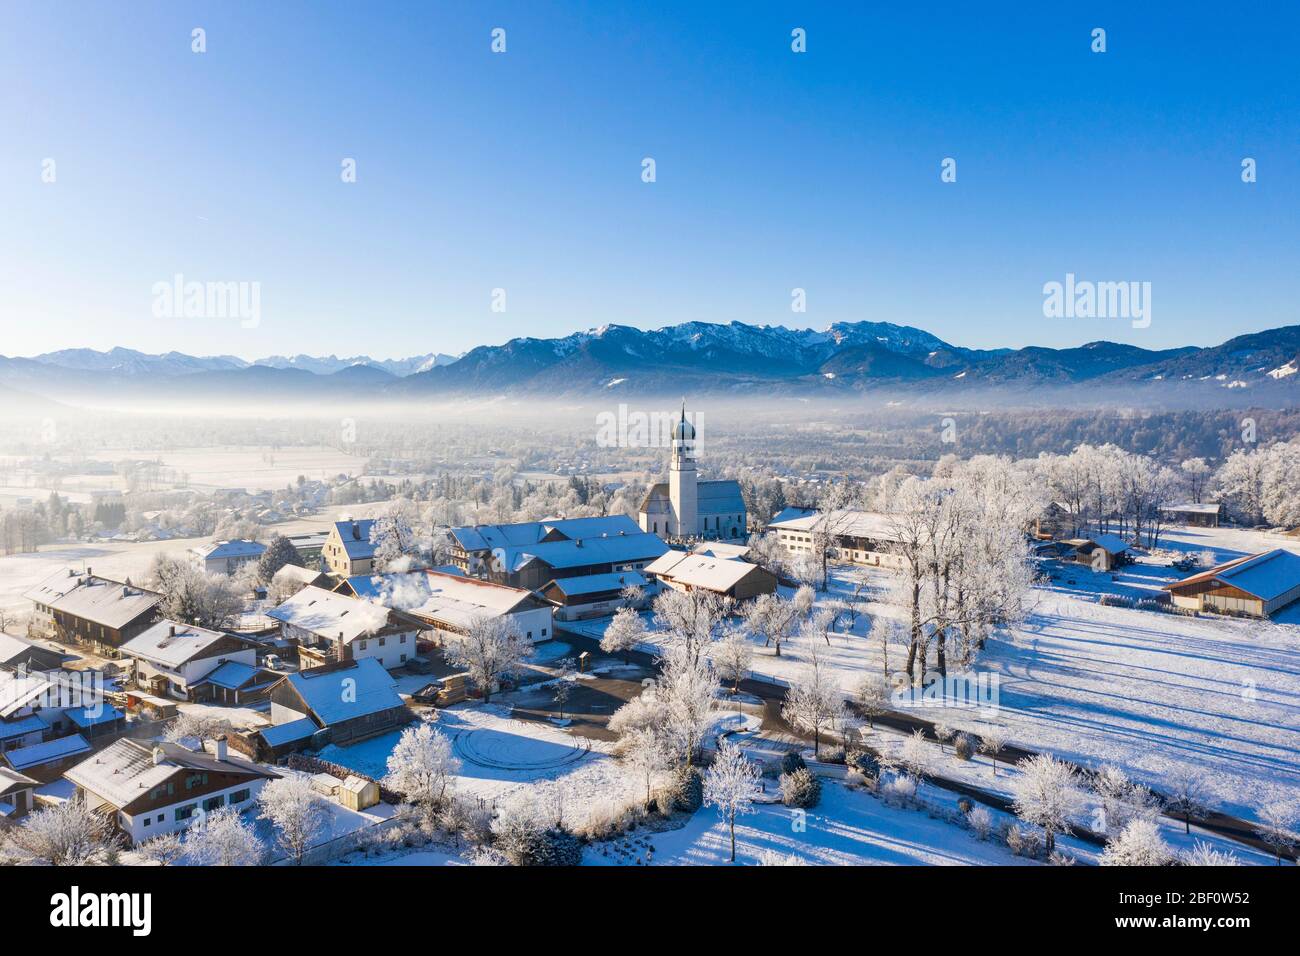 Village Gaissach in winter, drone shot, Isarwinkel, Upper Bavaria, Bavaria, Germany Stock Photo